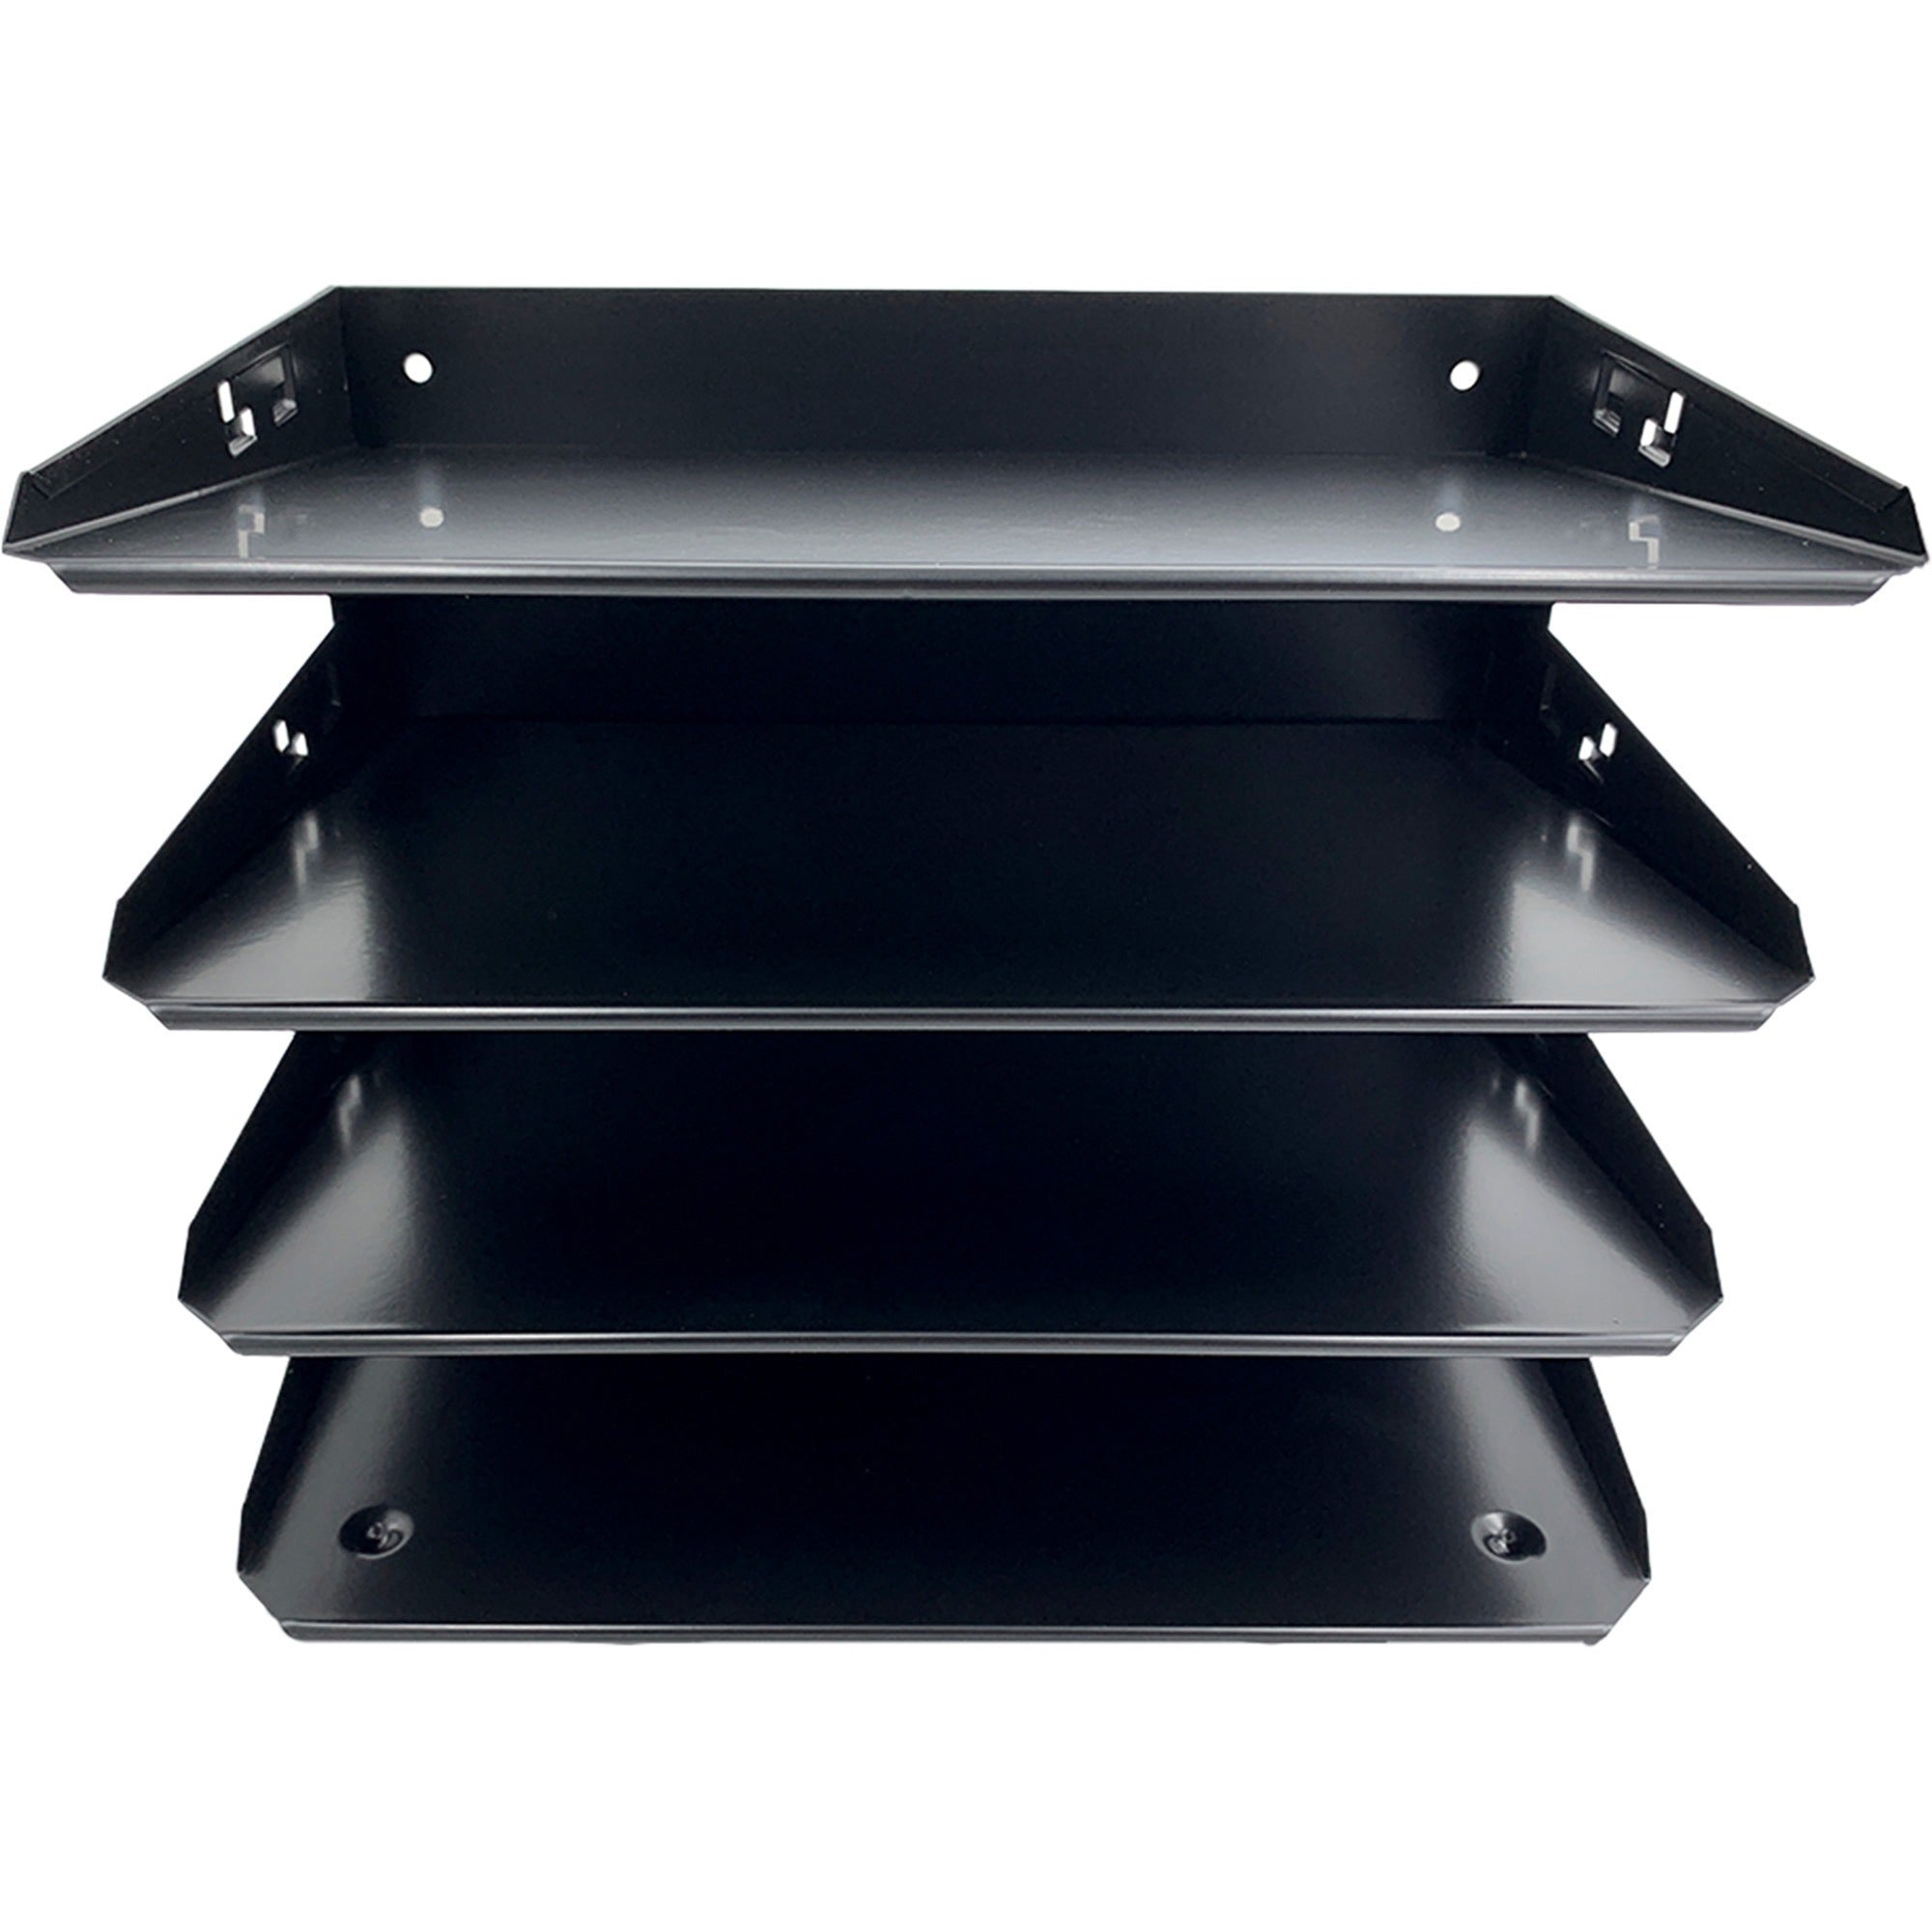 huron-horizontal-slots-desk-organizer-4-compartments-horizontal-9-height-x-12-width-x-87-depth-durable-black-steel-1-each_hurhasz0152 - 2